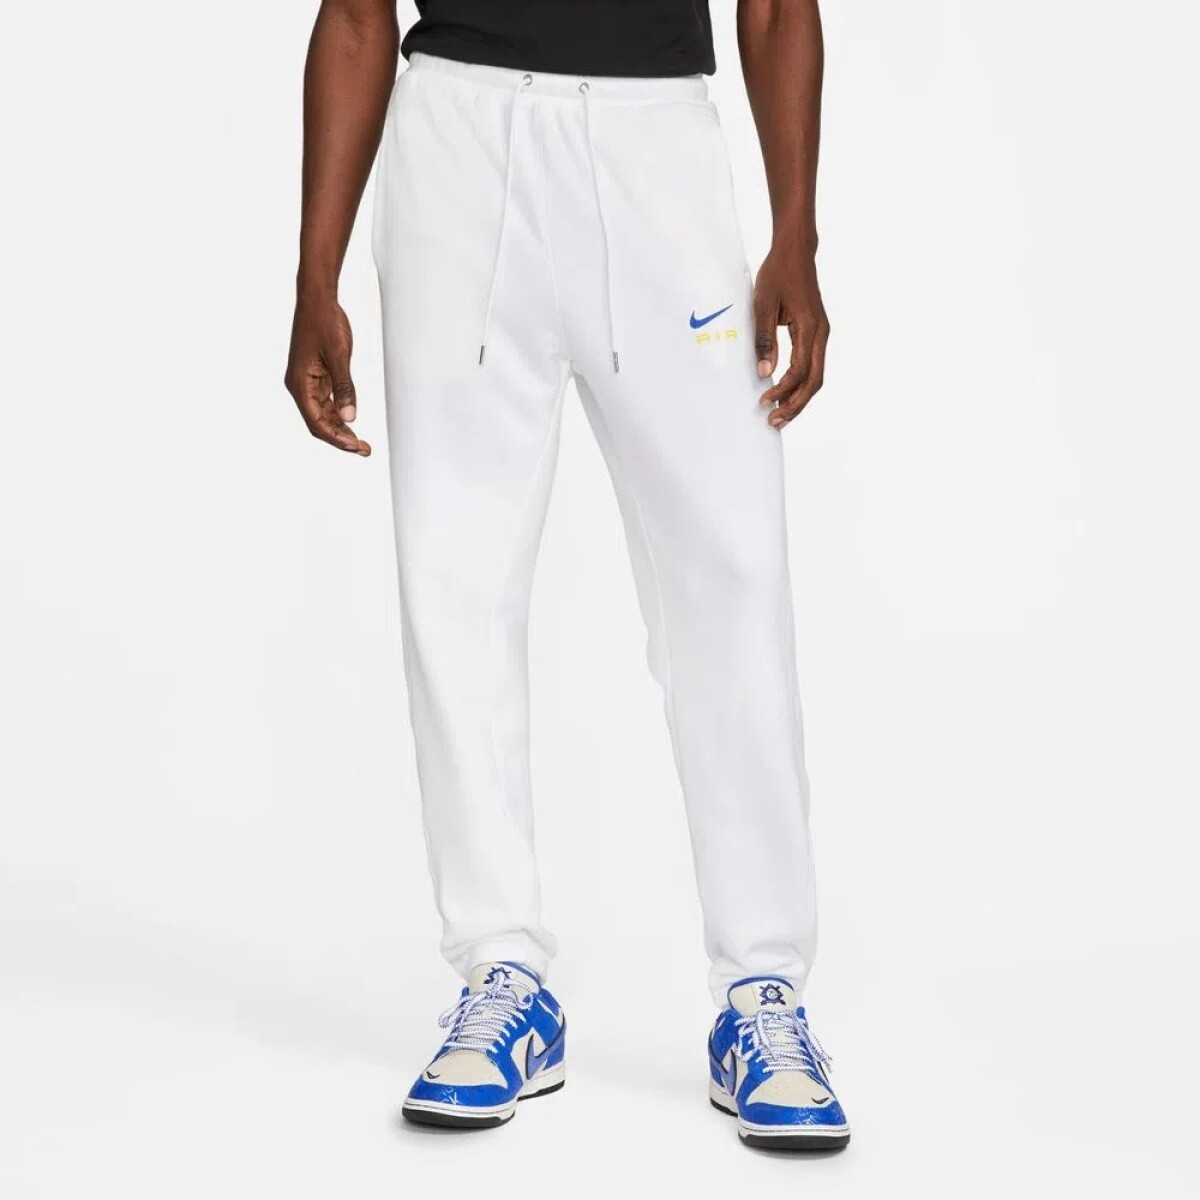 Pantalon Nike Moda Hombre Air FT - S/C 